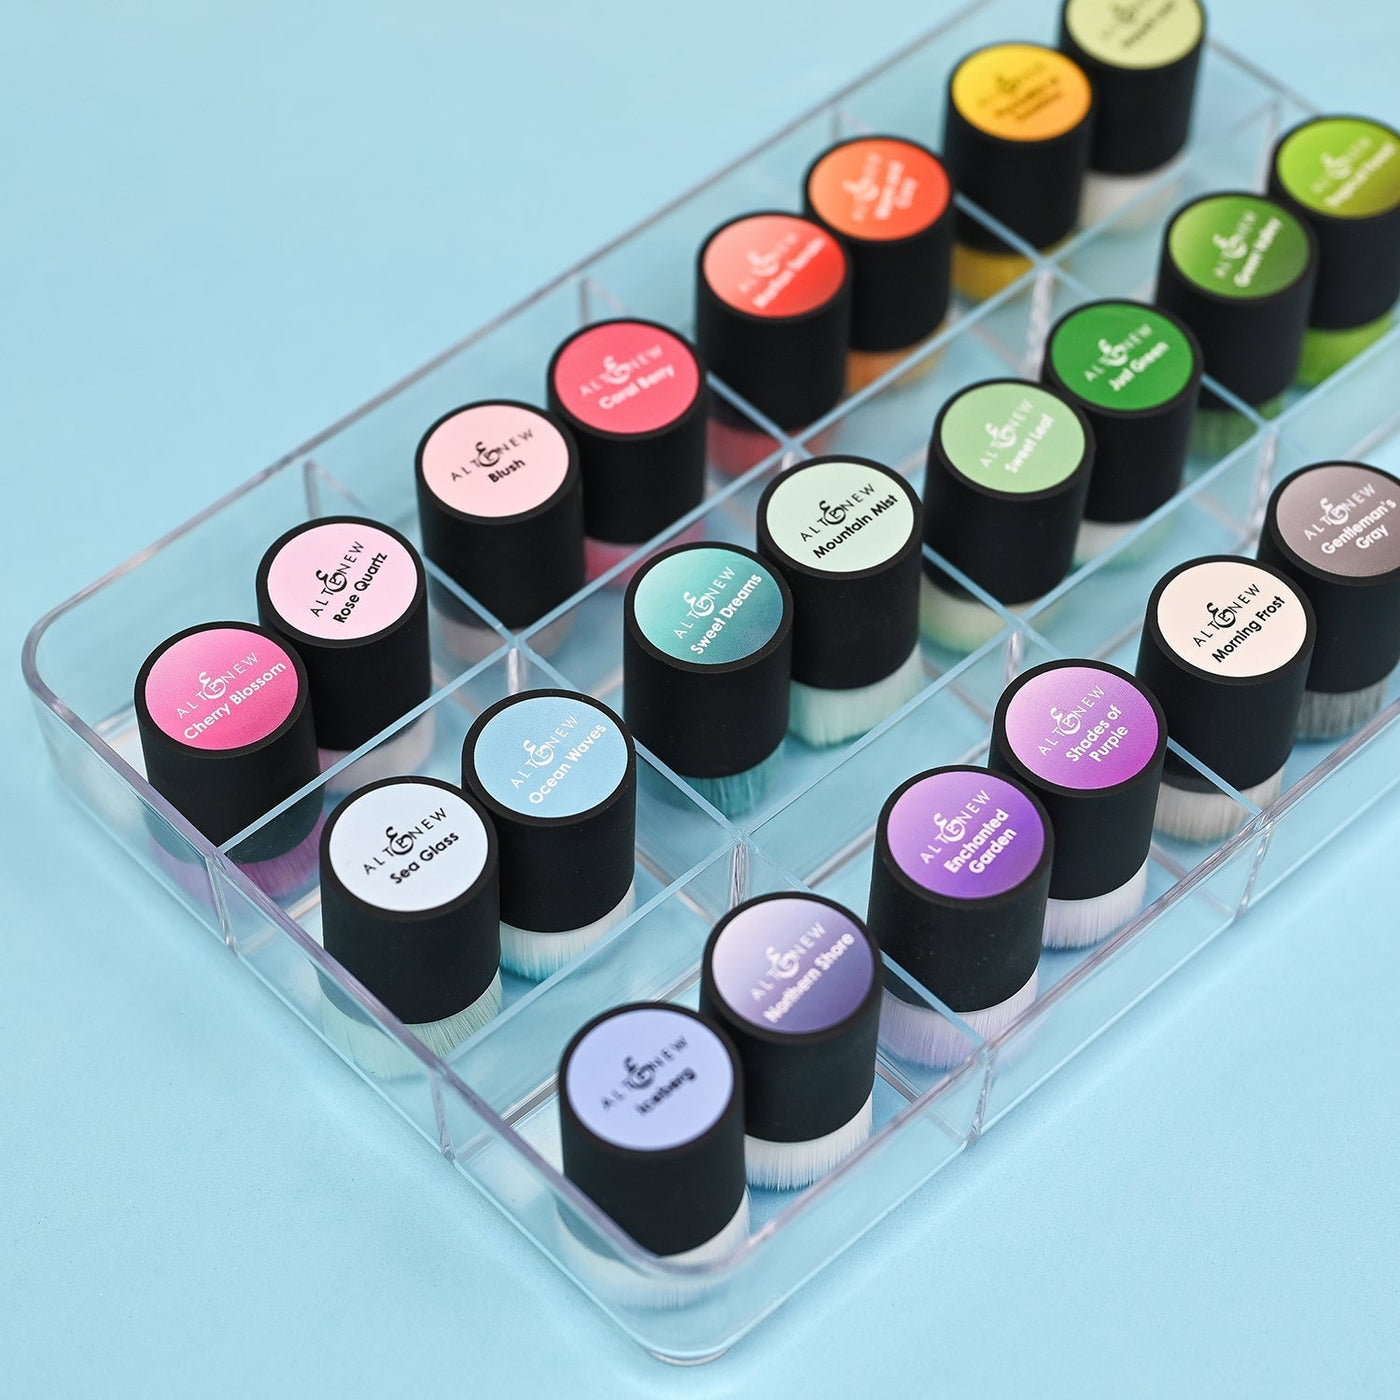 Decals Small Ink Blending Brush Label Set - All Crisp Dye Ink Colors (4 Sheets)